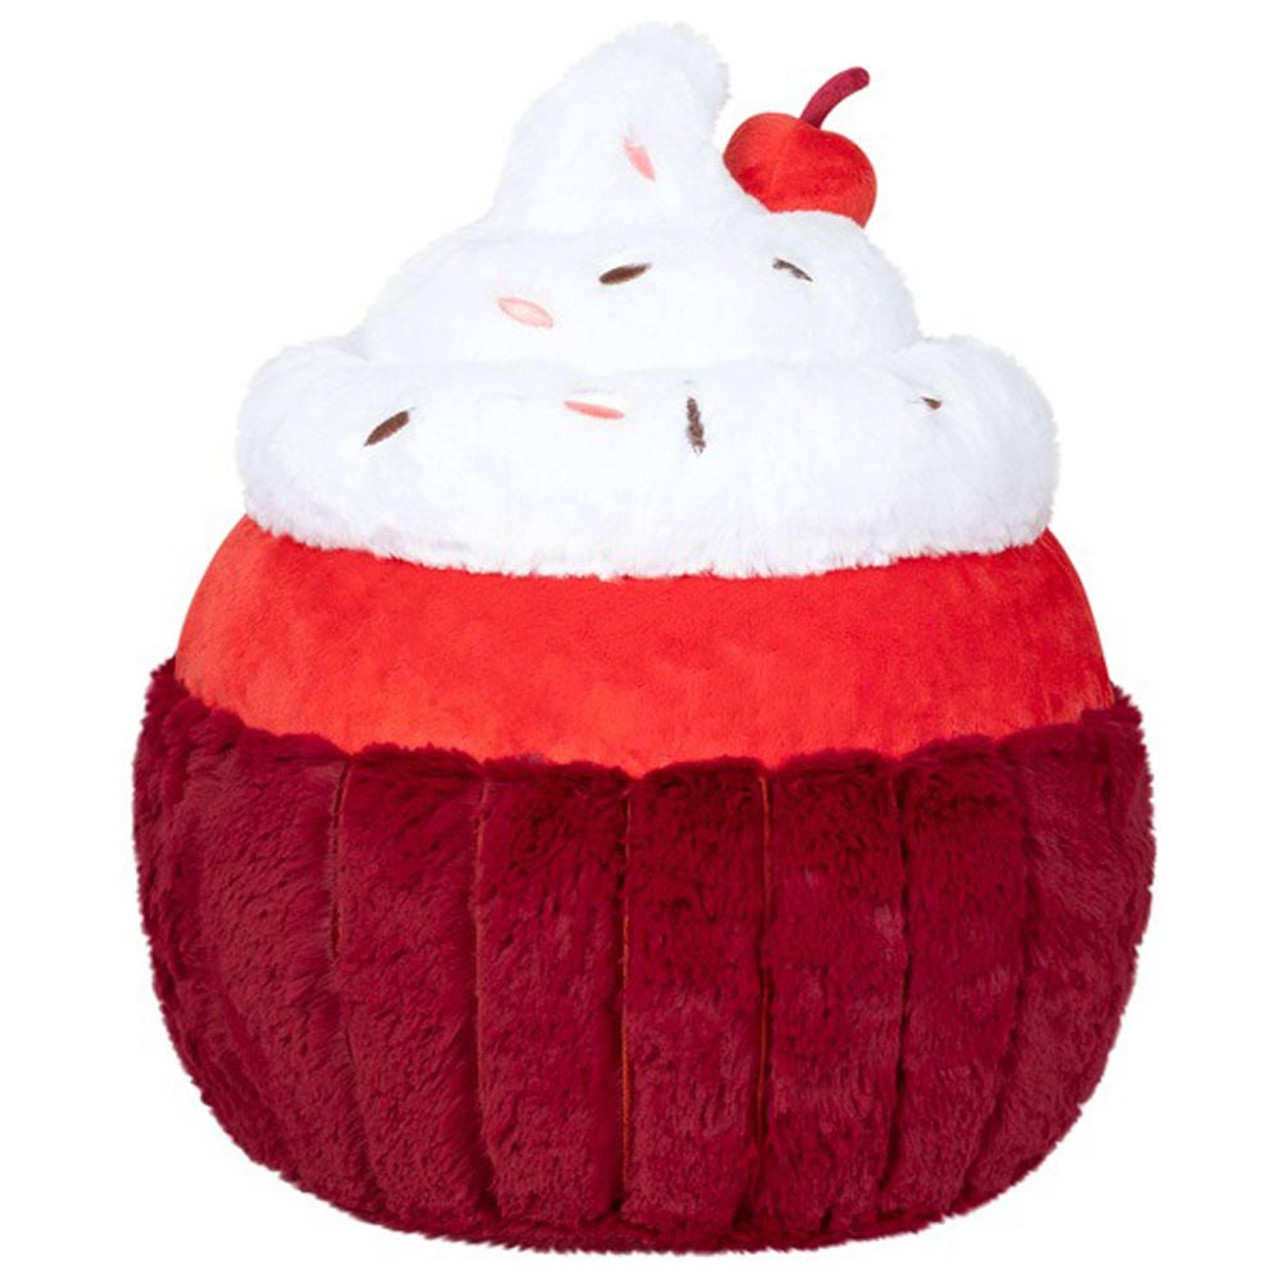 Squishable Red Velvet Cupcake 3